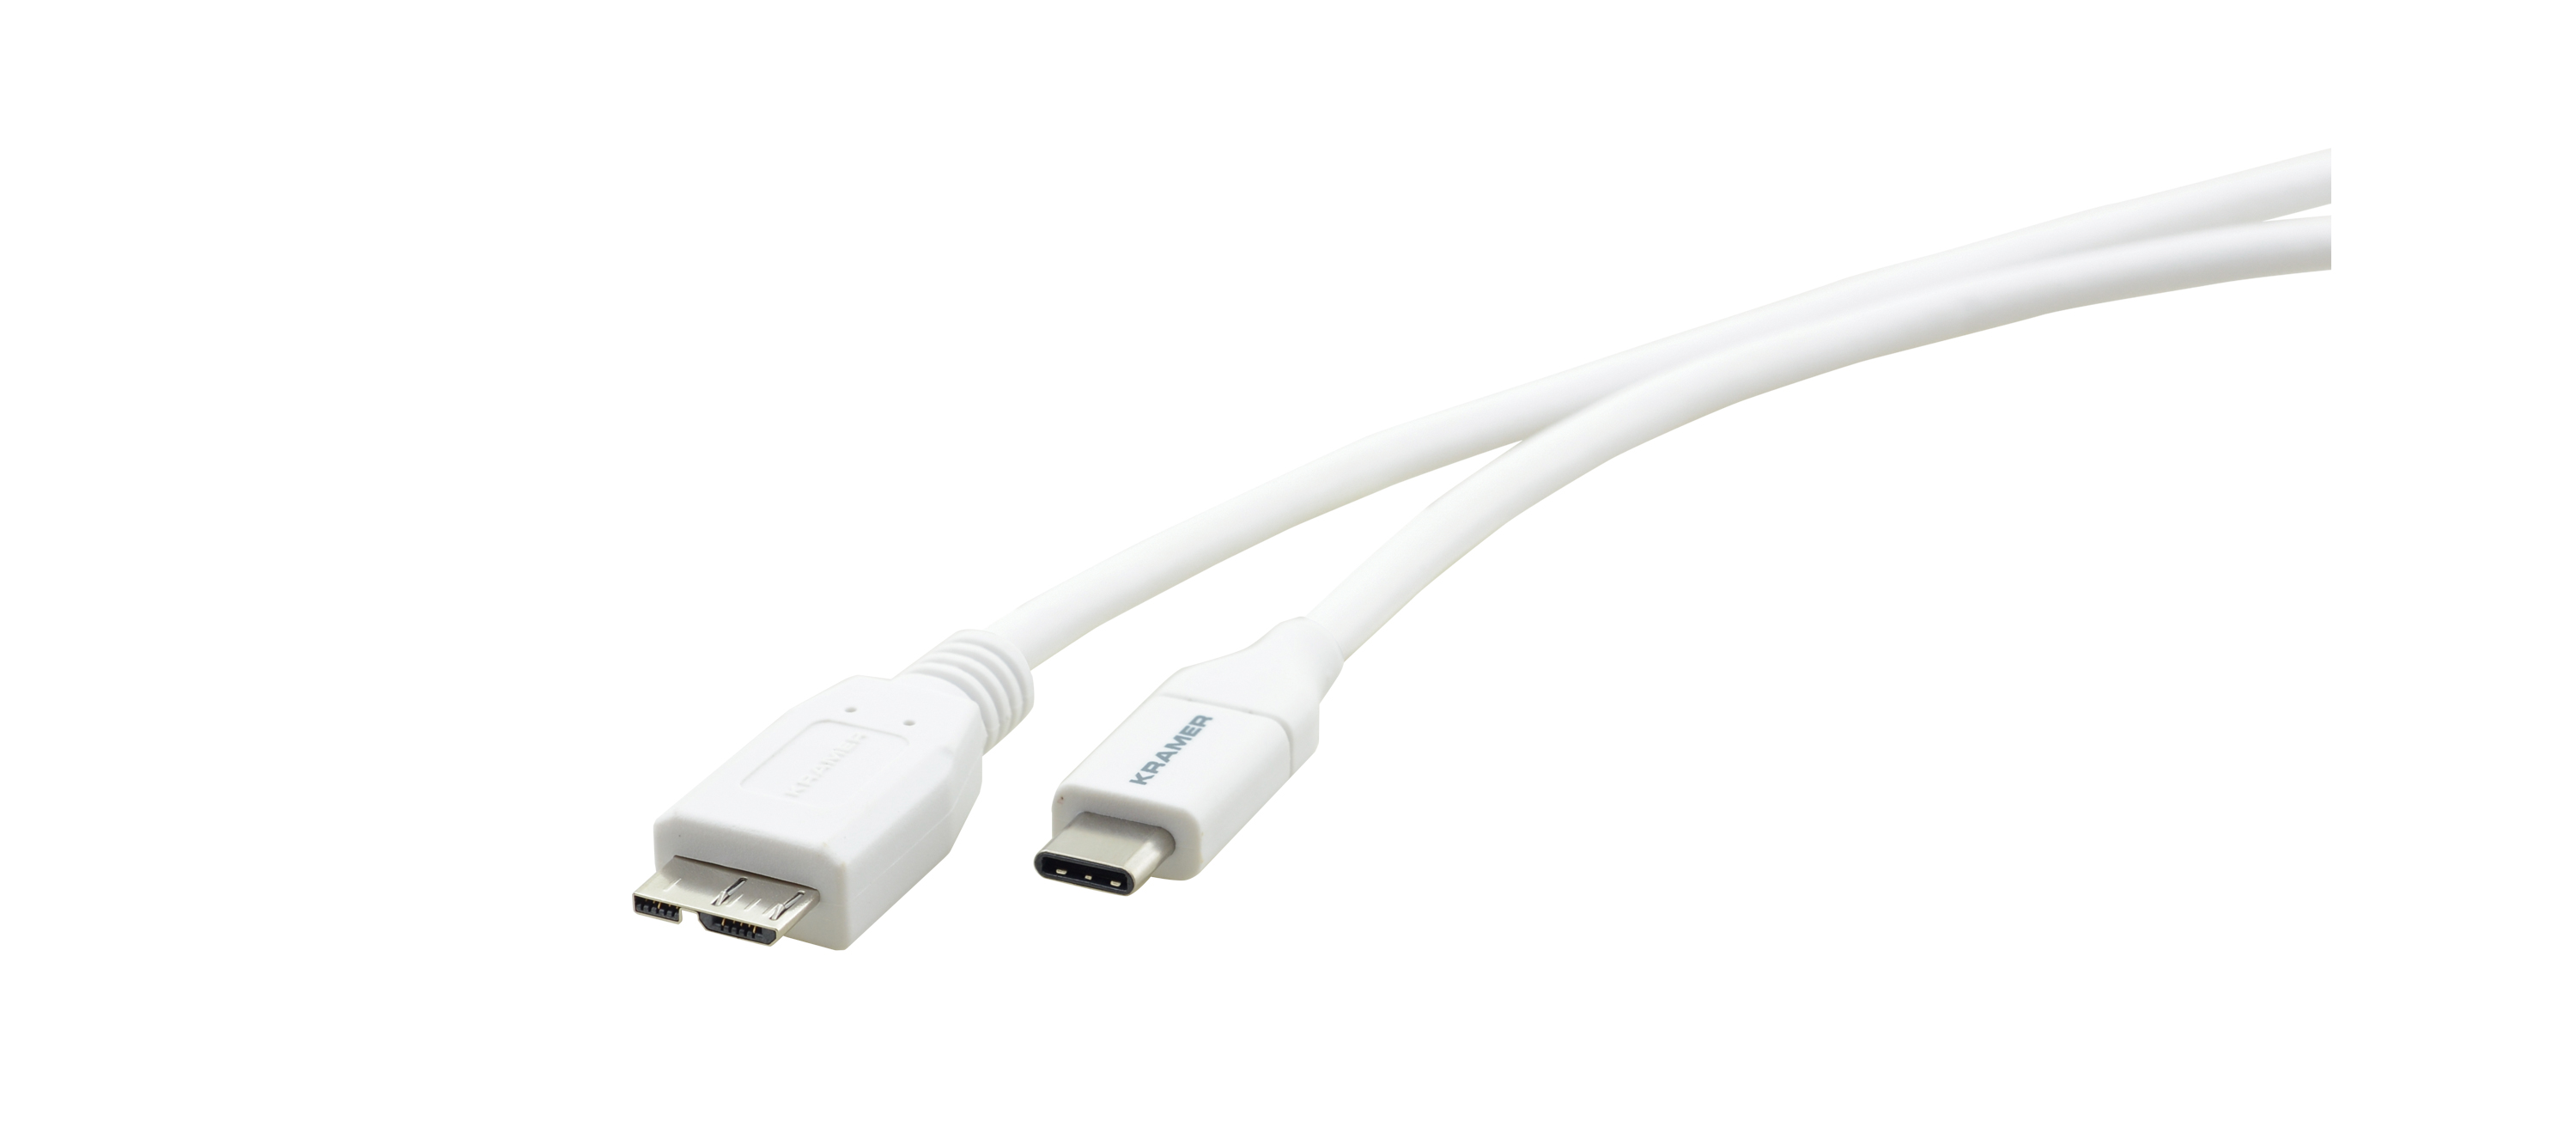 C-USB31/CMicroB-3 USB 3.1 GEN–2 Cables USB–C (M) to USB–MicroB (M) — 3ft